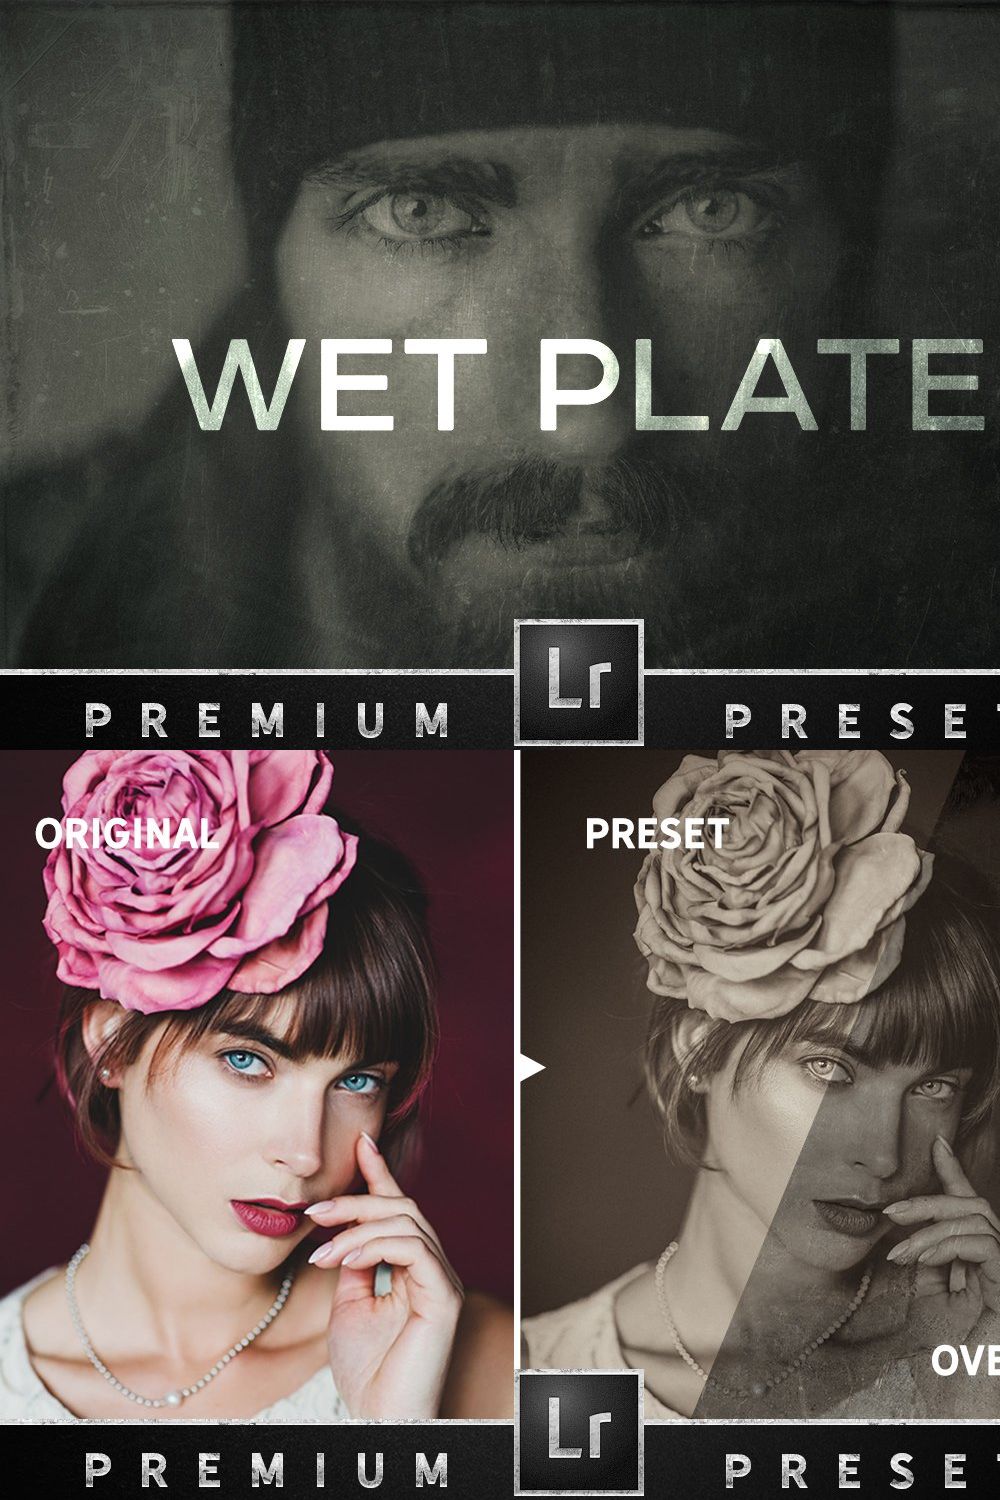 Wet Plate Effect Lightroom Presets pinterest preview image.